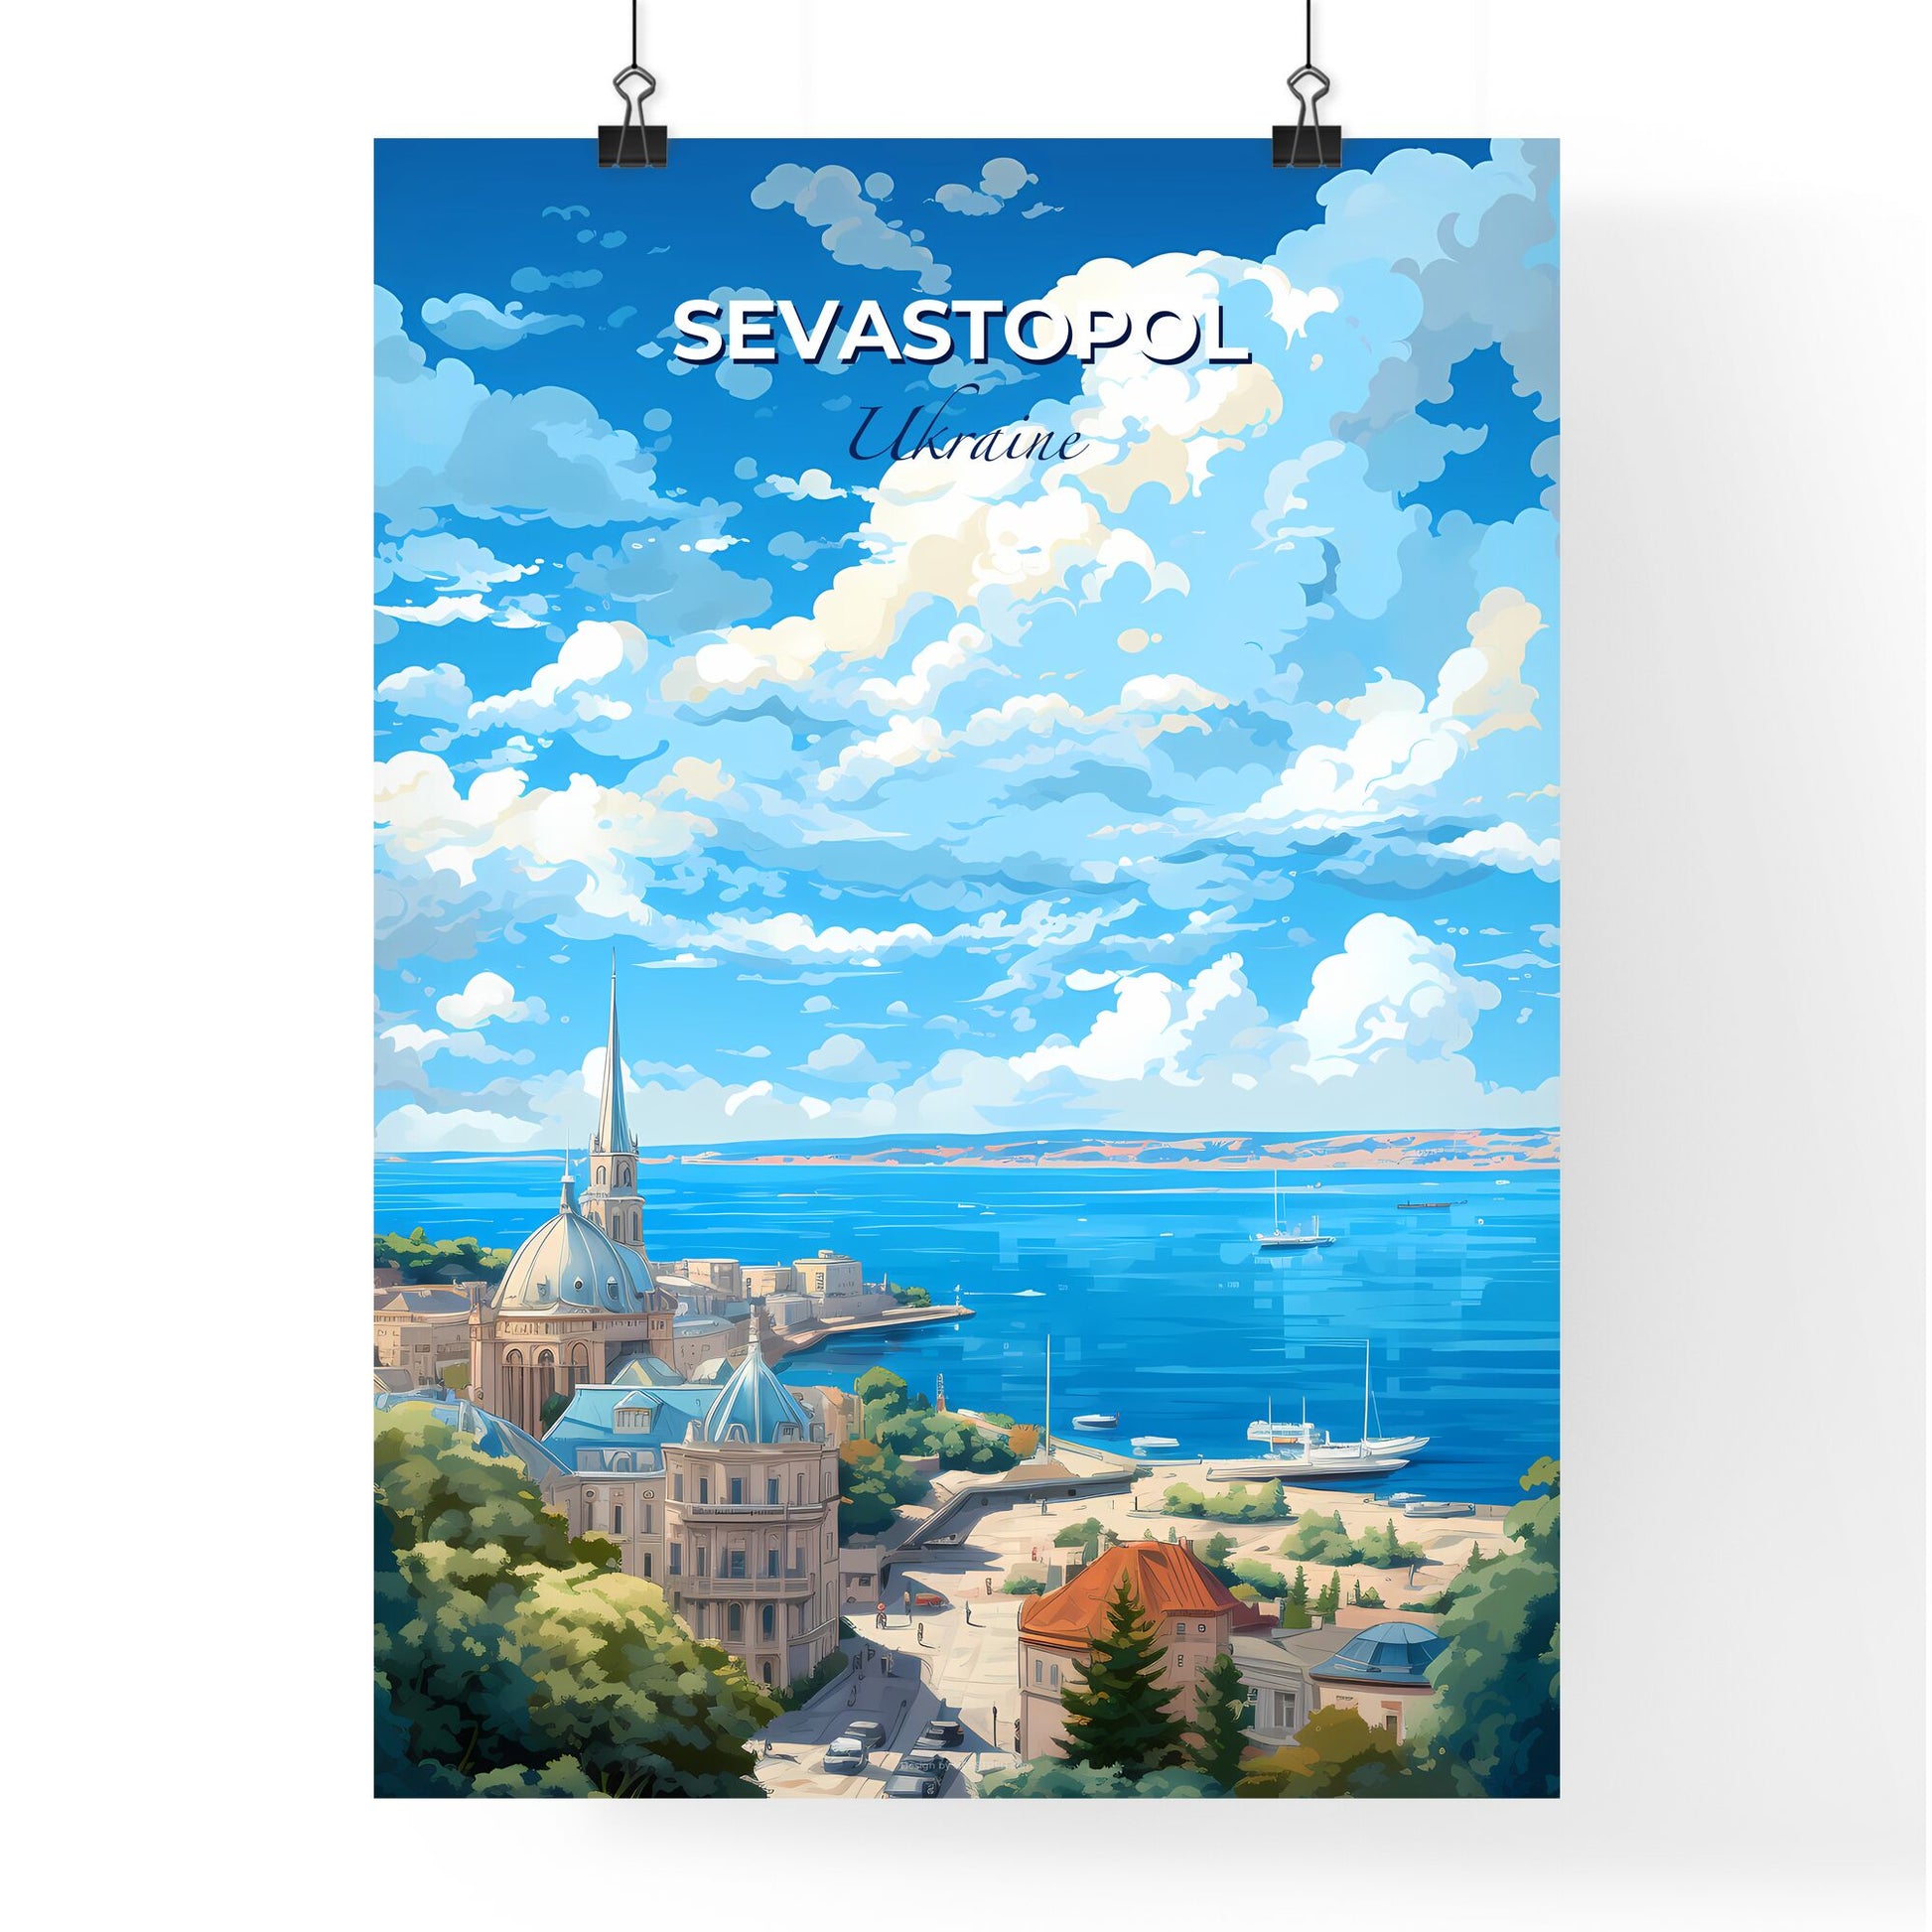 Sevastopol Ukraine Skyline - A City By The Water - Customizable Travel Gift Default Title